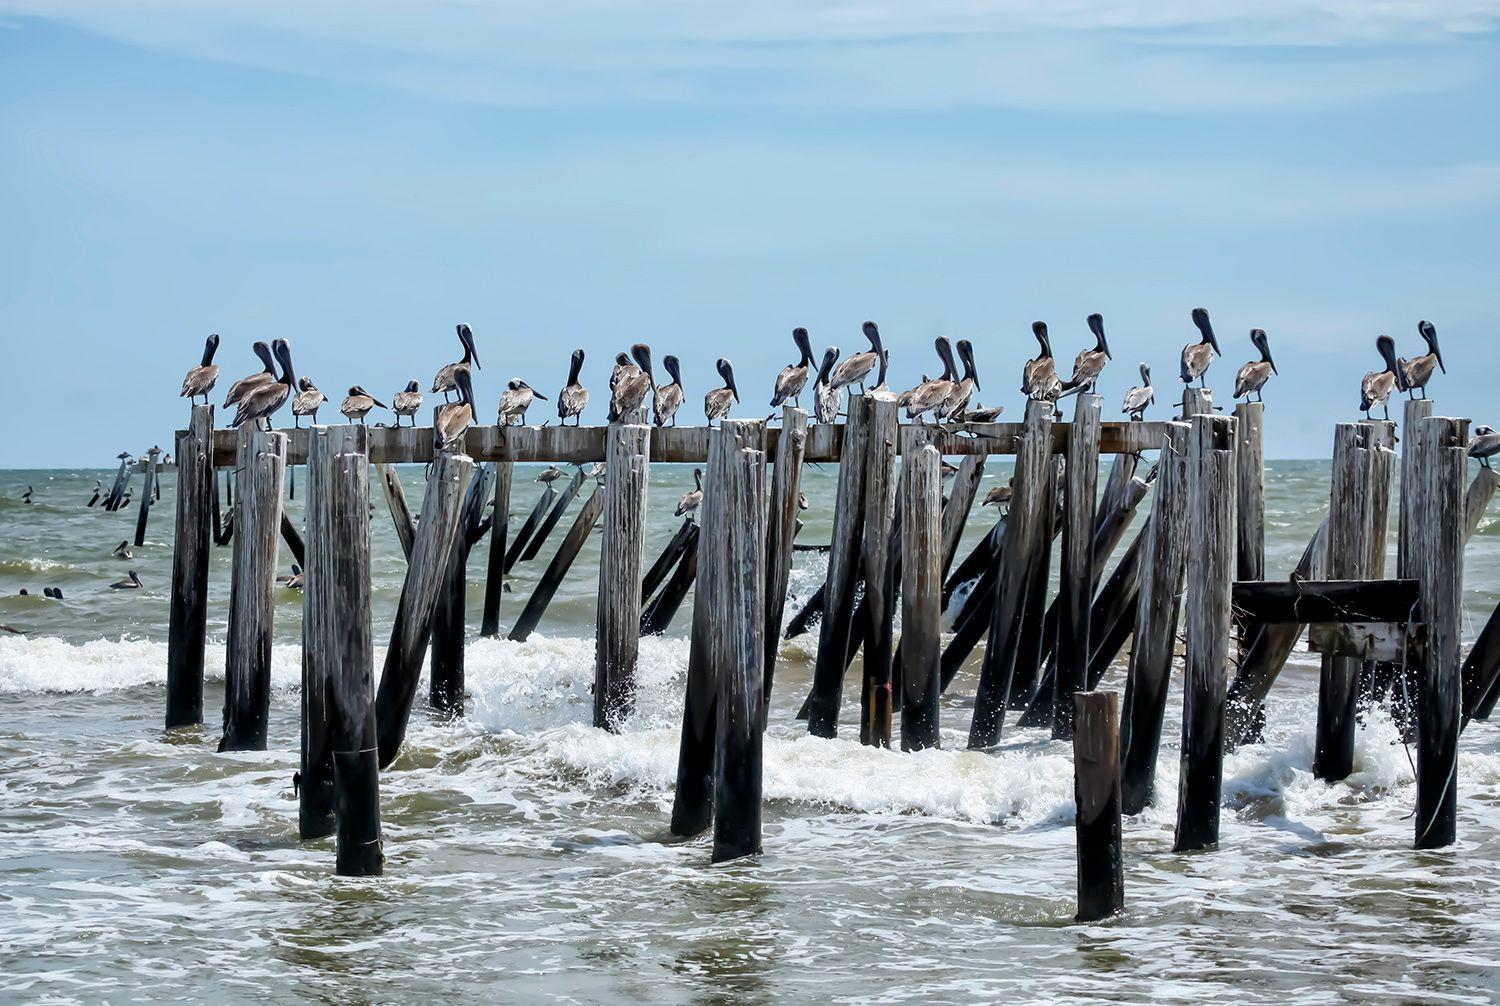 Fikry Botros Landscape Photograph - The Pelican Bar - Pelican birds perched at beach shoreline ocean waves landscape